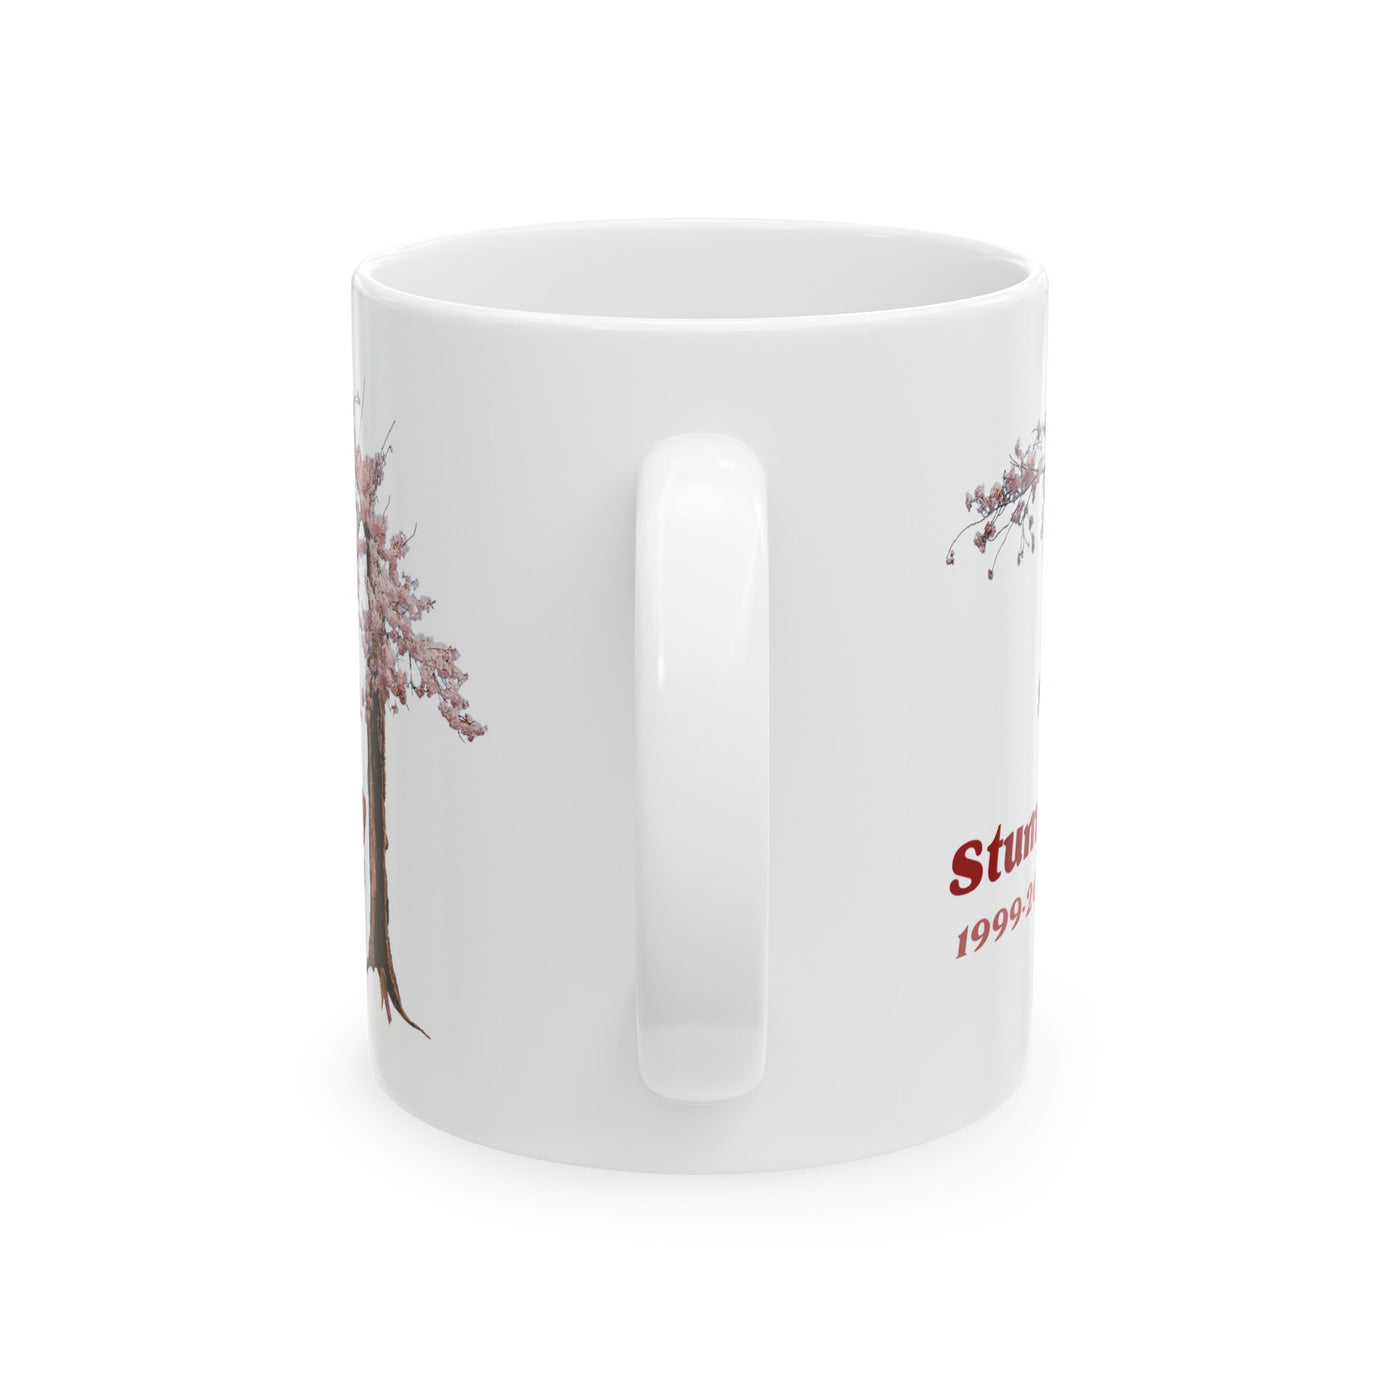 Stumpy 1999 to 2024 - Ceramic Mug 11oz